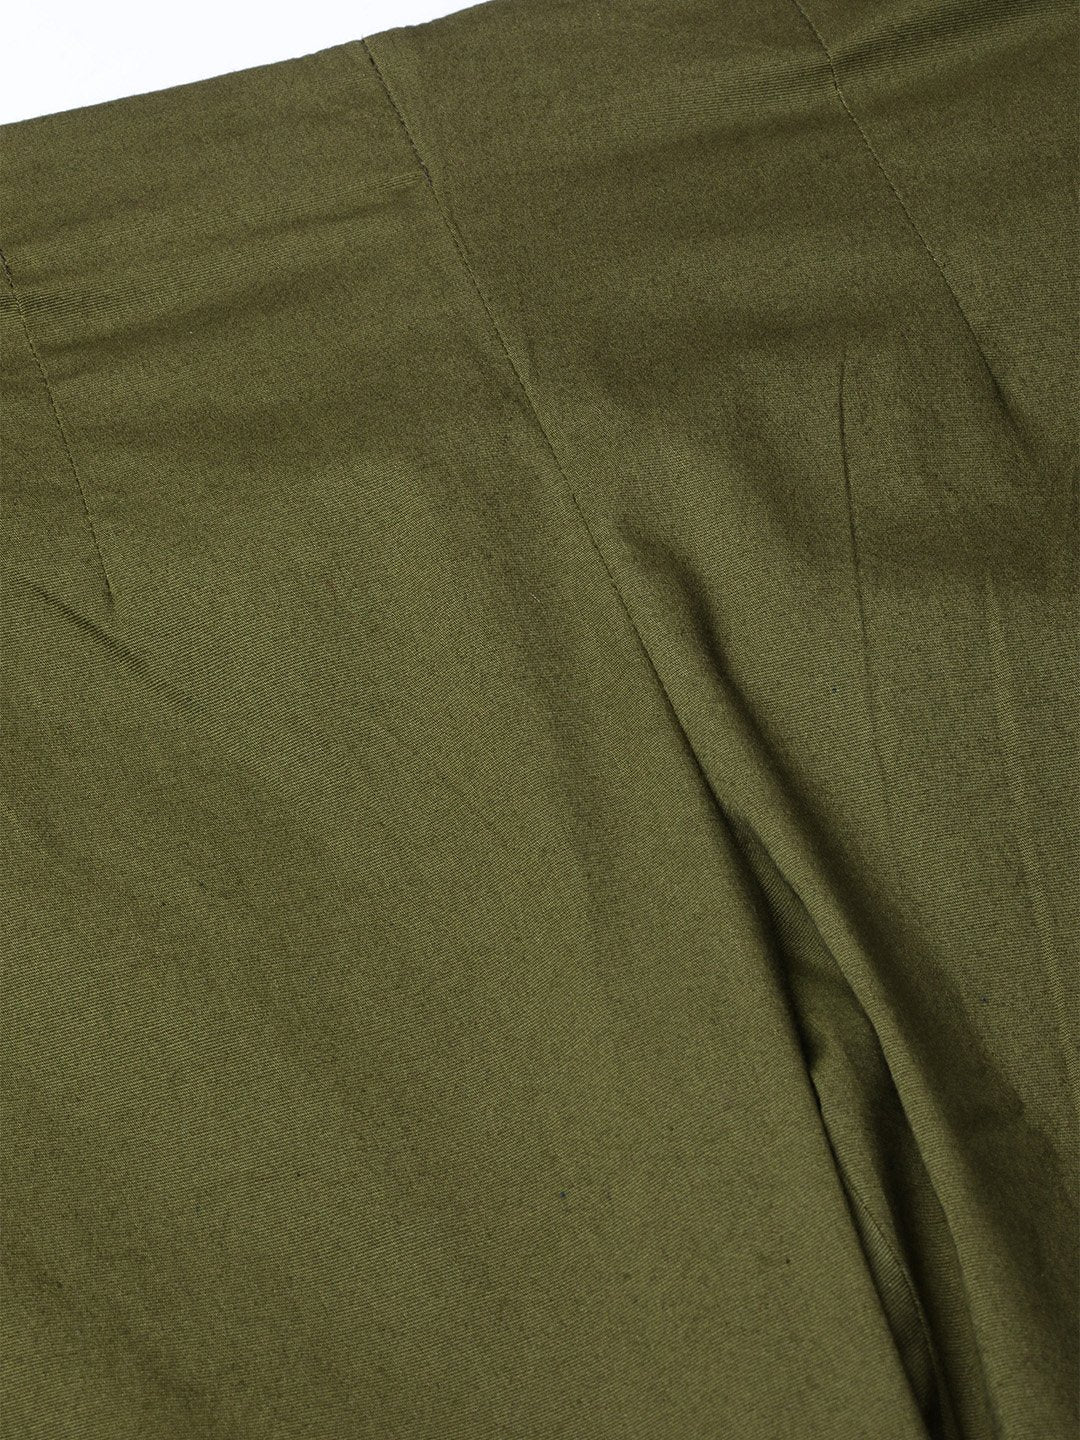 Women's Olive Green Smart Slim Fit Solid Regular Trousers - Jompers